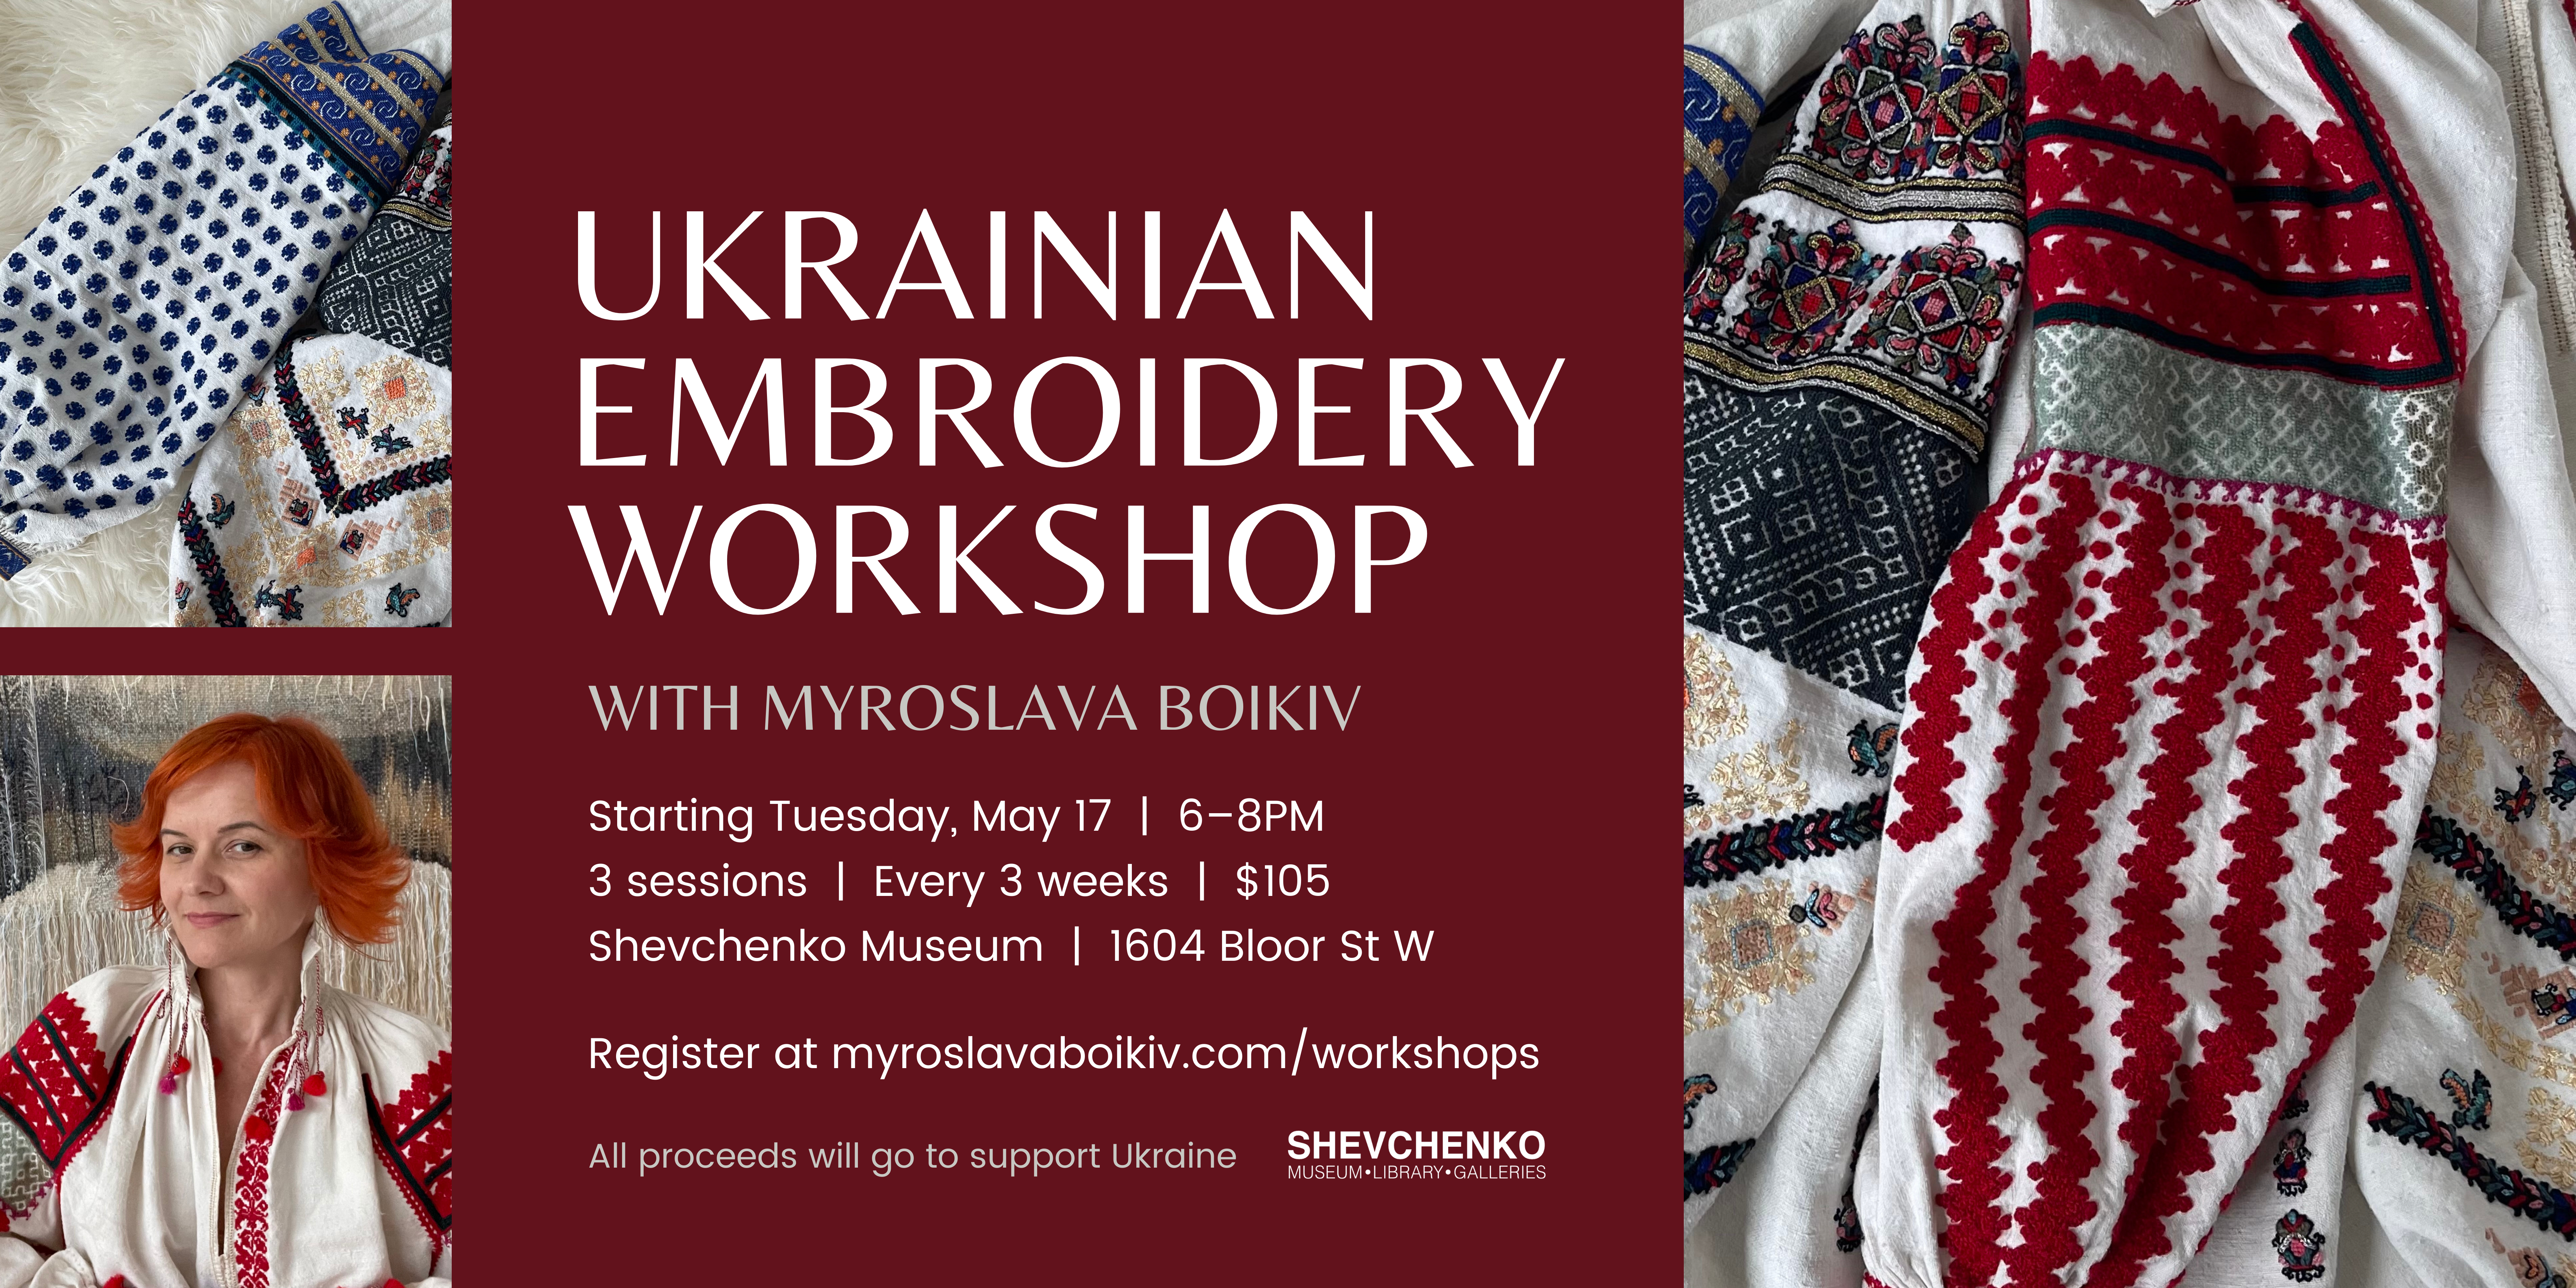 Traditional Ukrainian Embroidery Workshop with Myroslava Boikiv